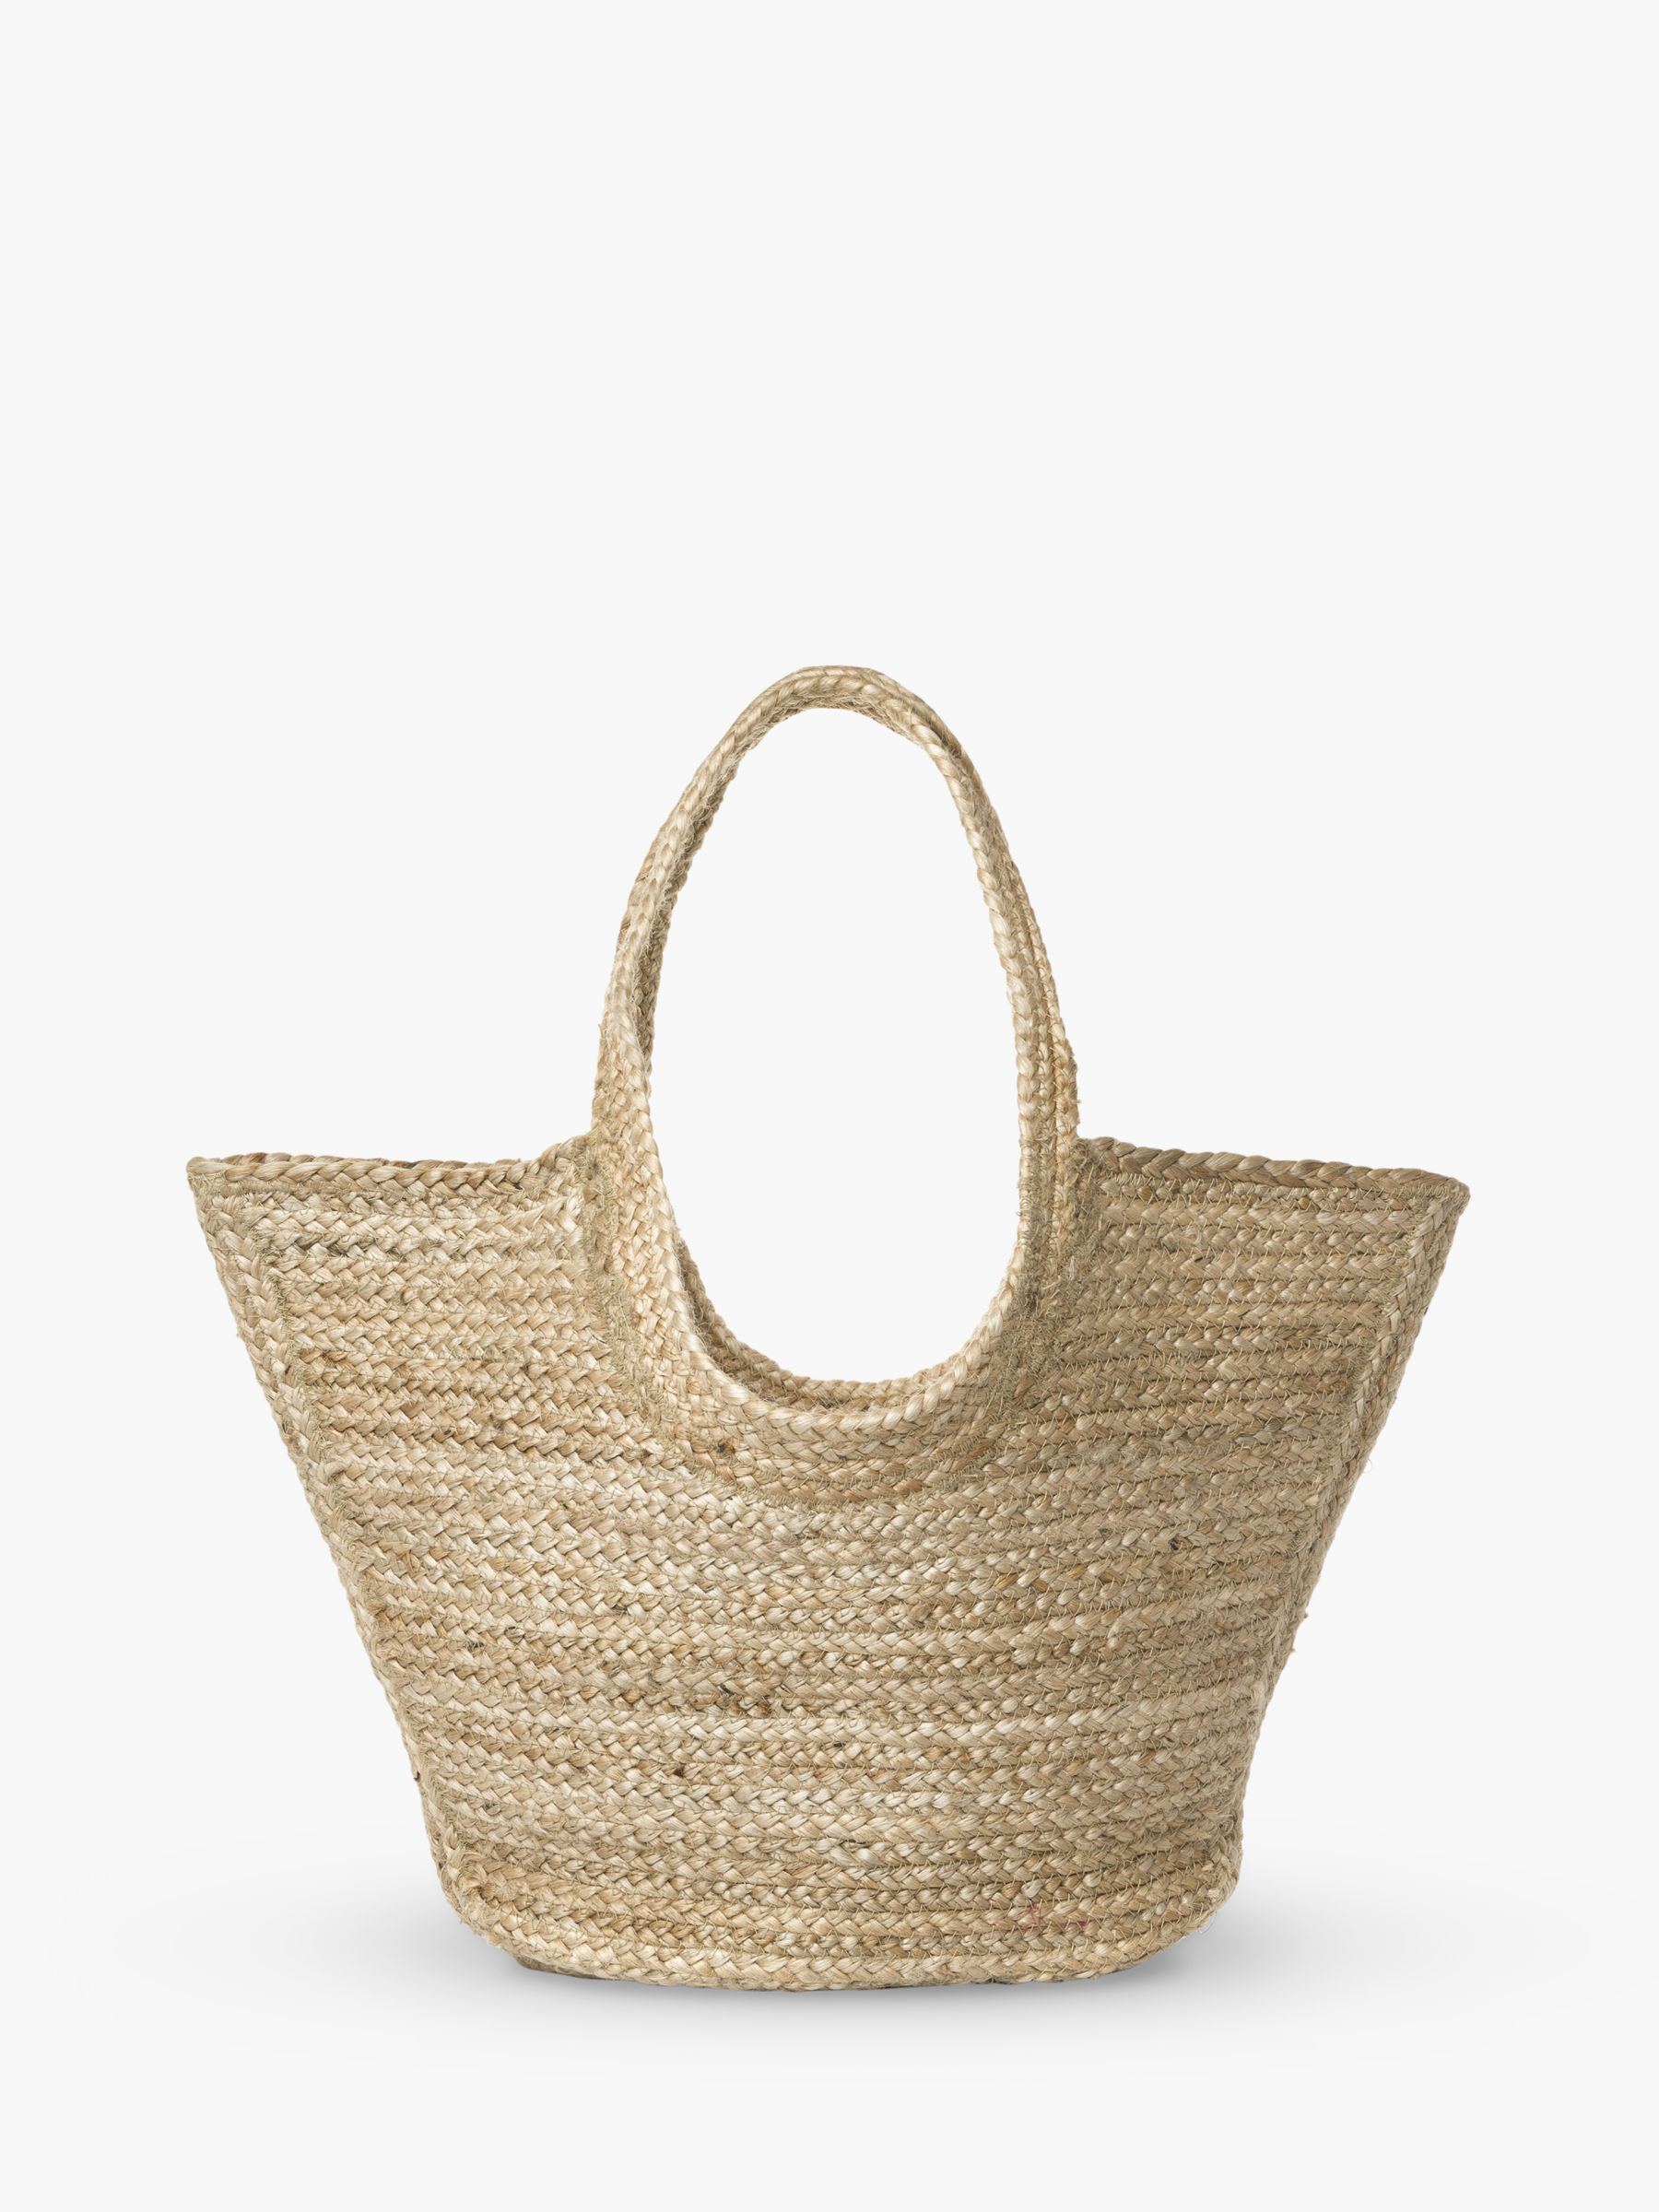 buy straw bags online